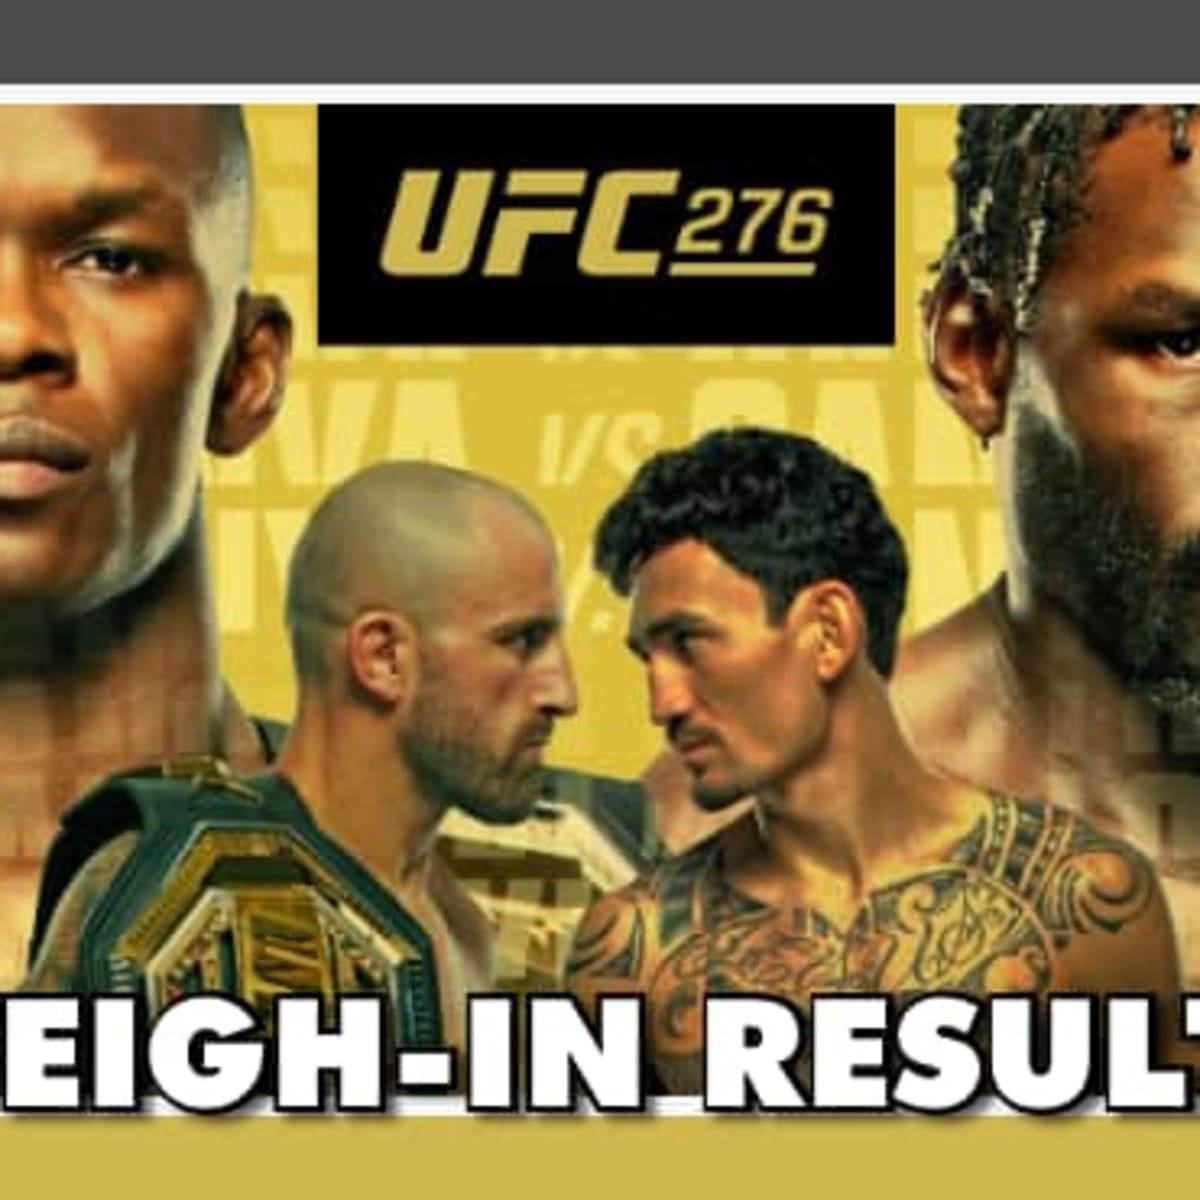 UFC 276 results: Who won Brad Tavares vs. Dricus Du Plessis bout